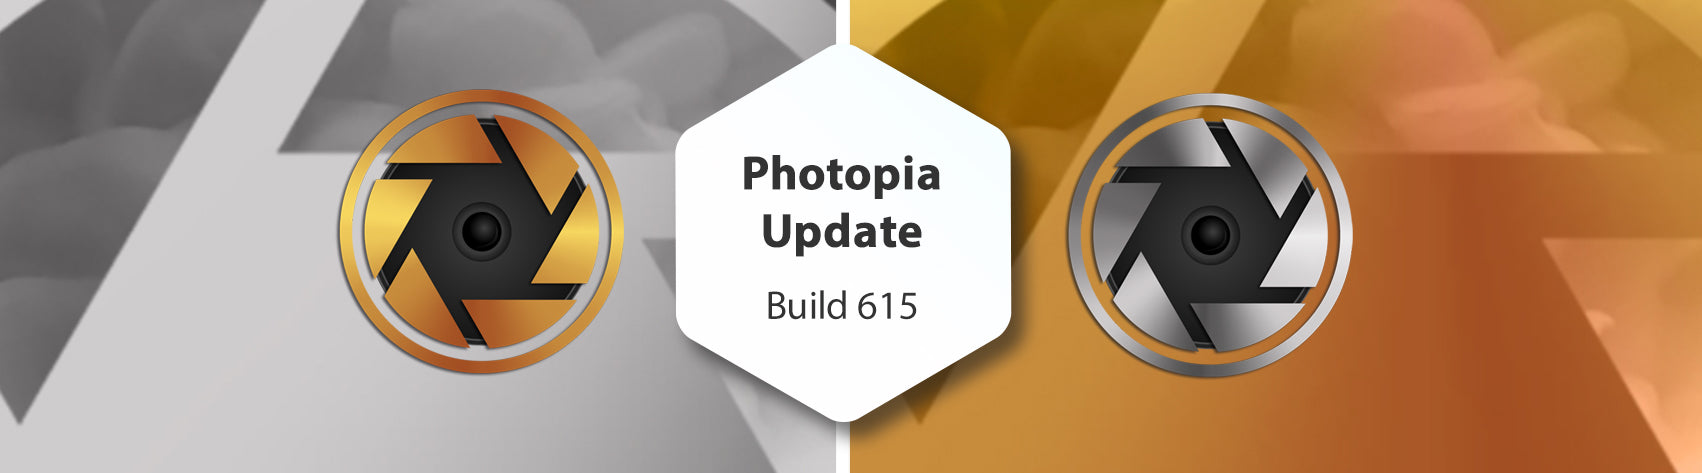 Photopia Update - Build 615